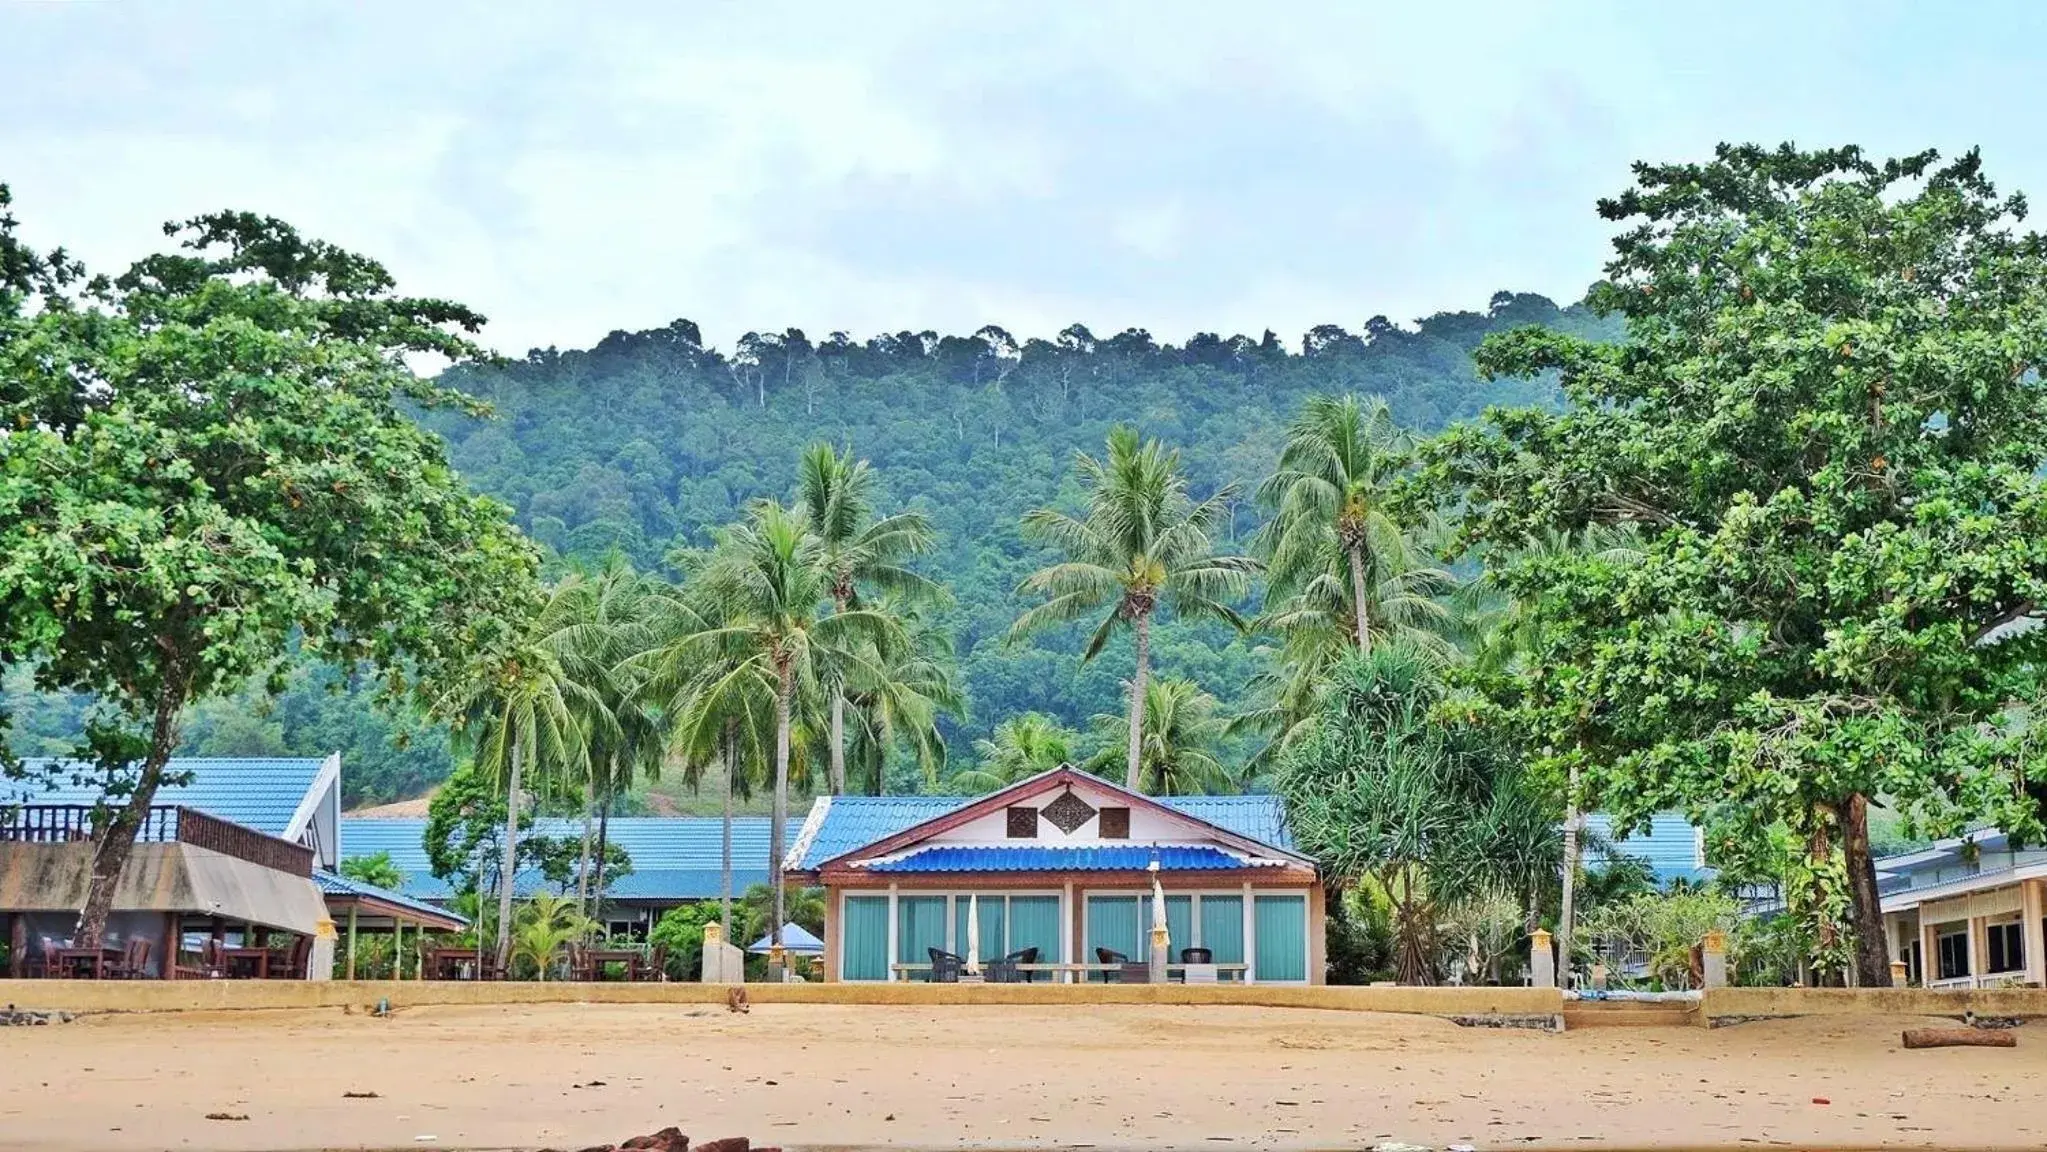 Property Building in Andaman Lanta Resort - SHA Extra Plus